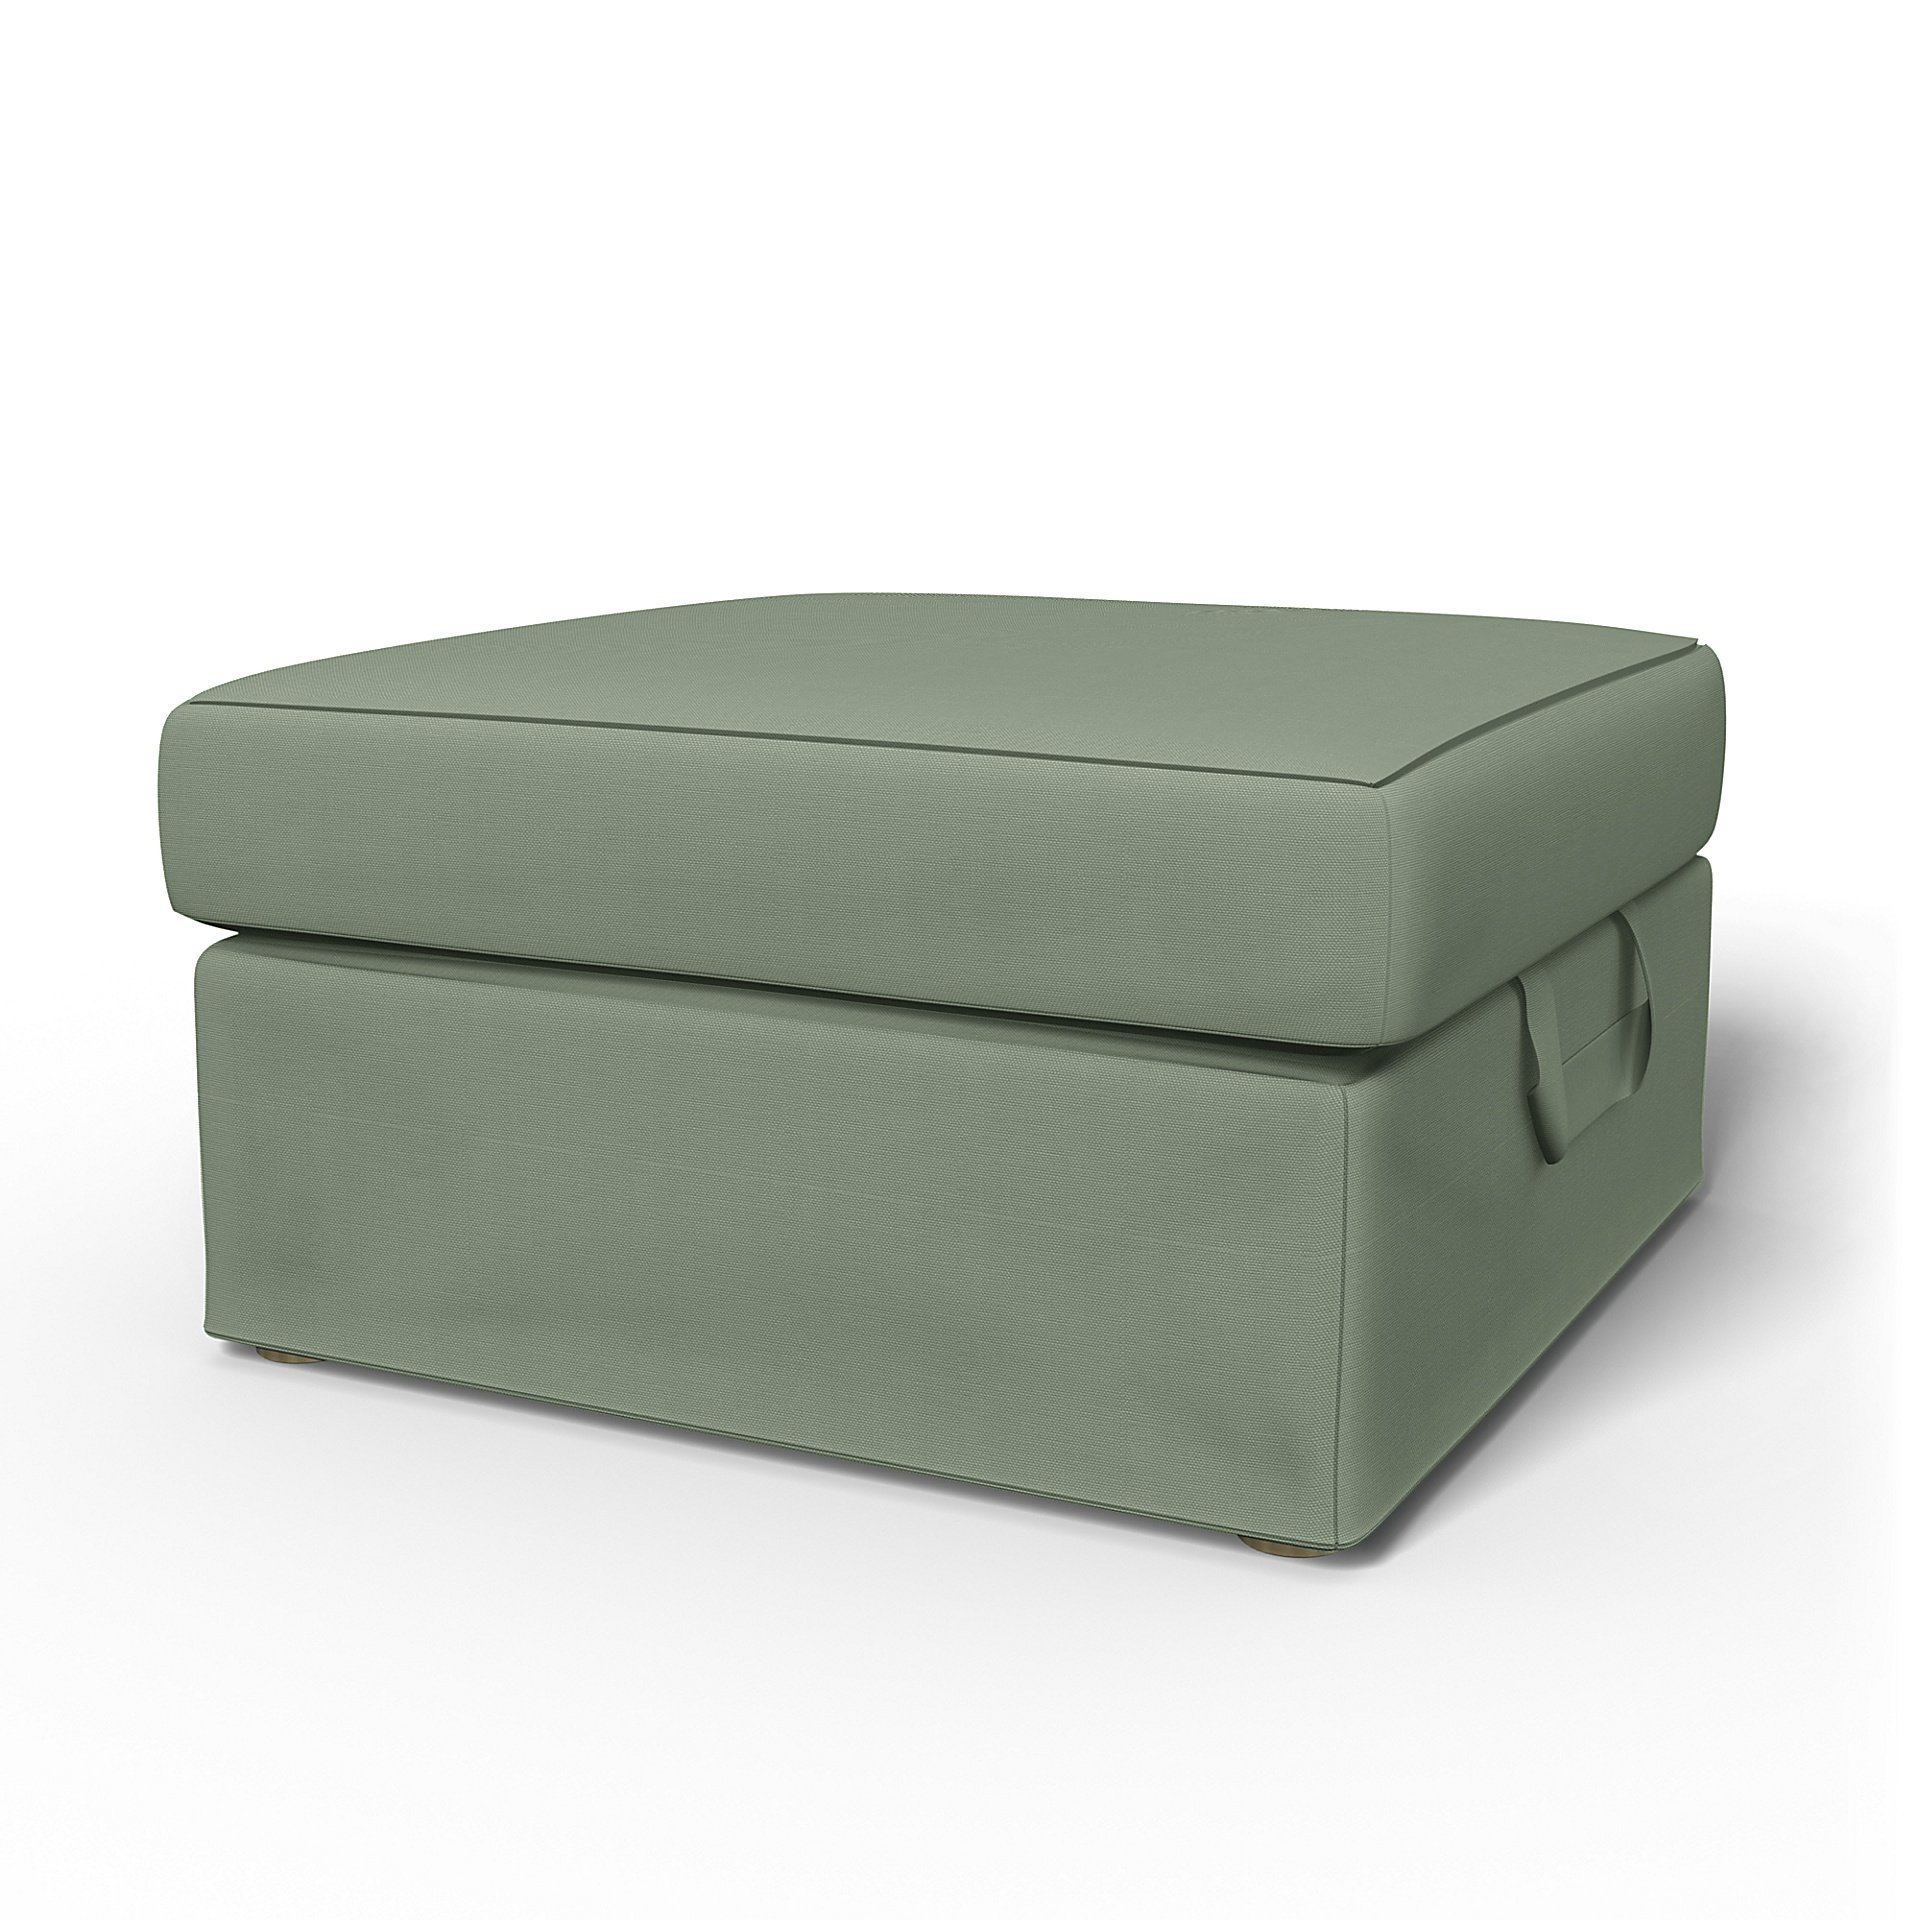 IKEA - Tomelilla Foto Footstool Cover, Seagrass, Cotton - Bemz